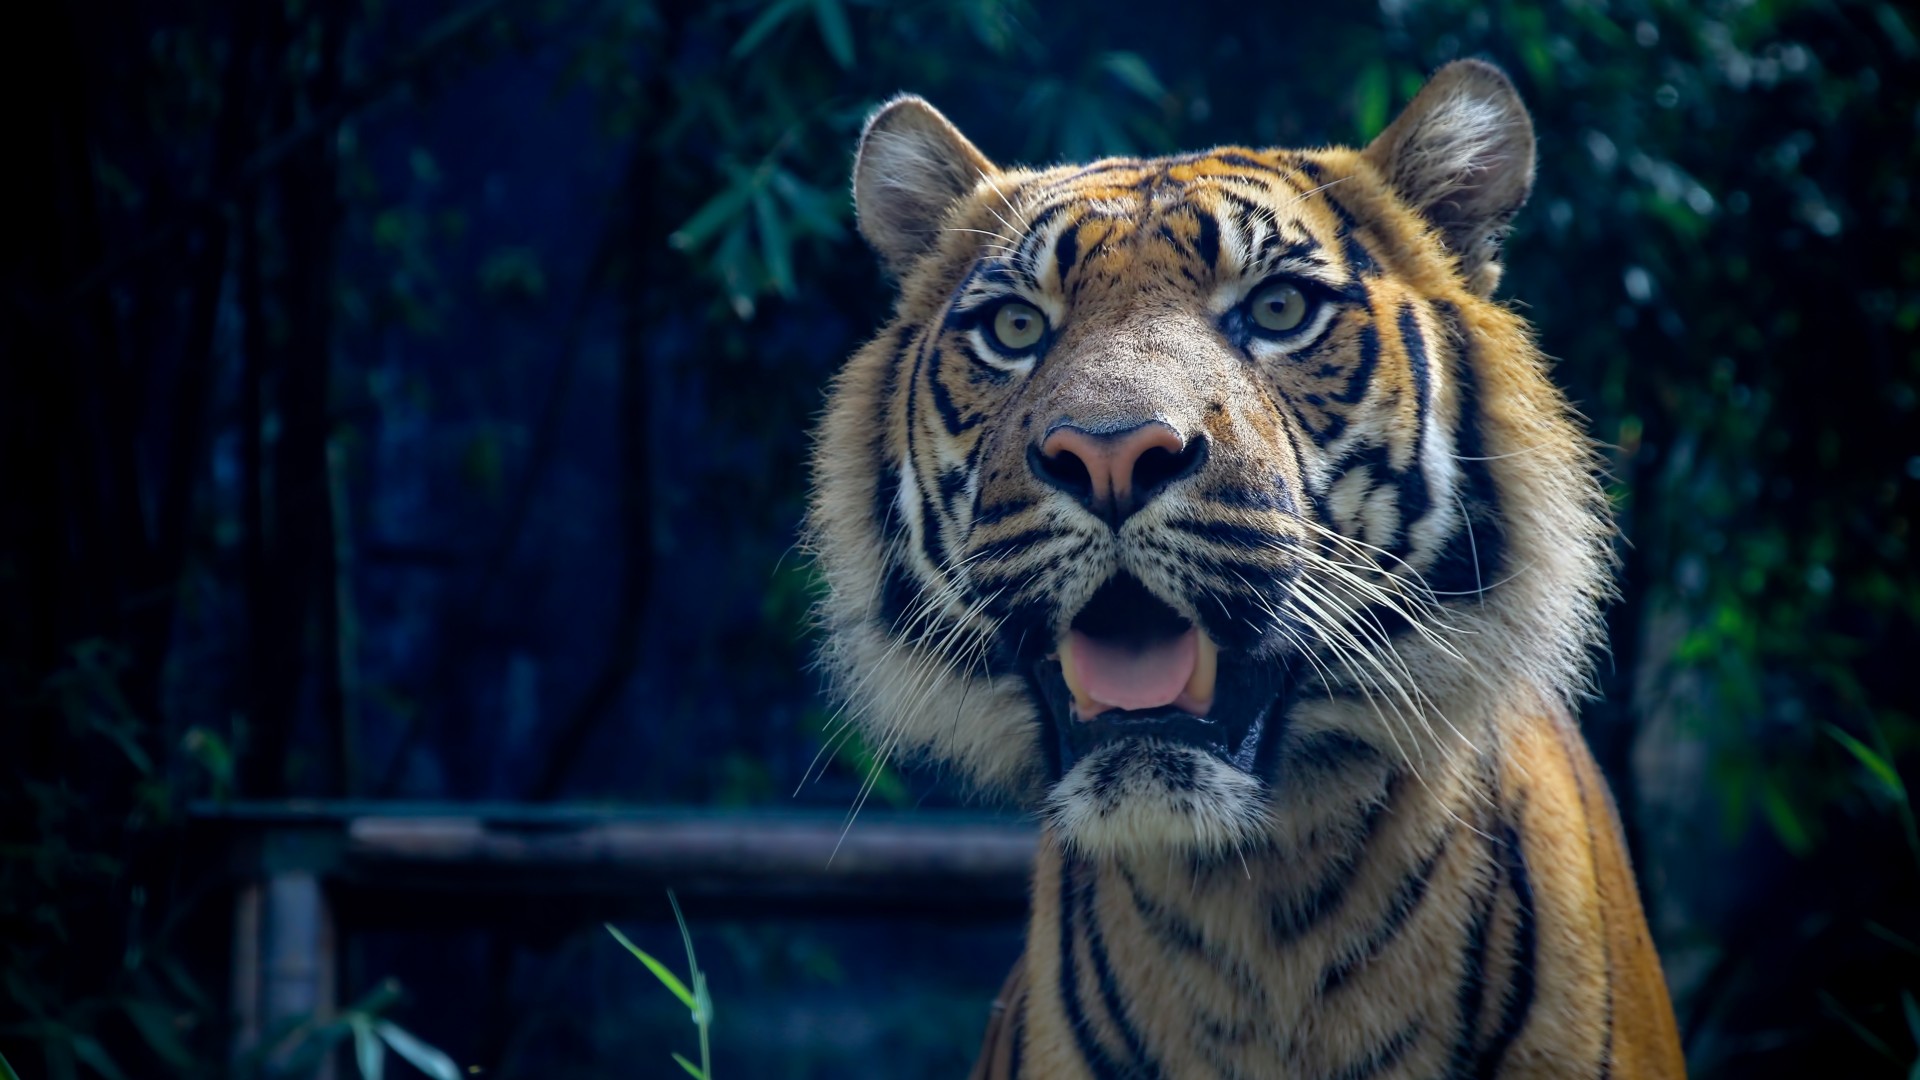 тигр, 4k, HD, суматранский, глаза, шерсть, взгляд, Tiger, 4k, HD wallpaper, Sumatran, amazing eyes, fur, look (horizontal)